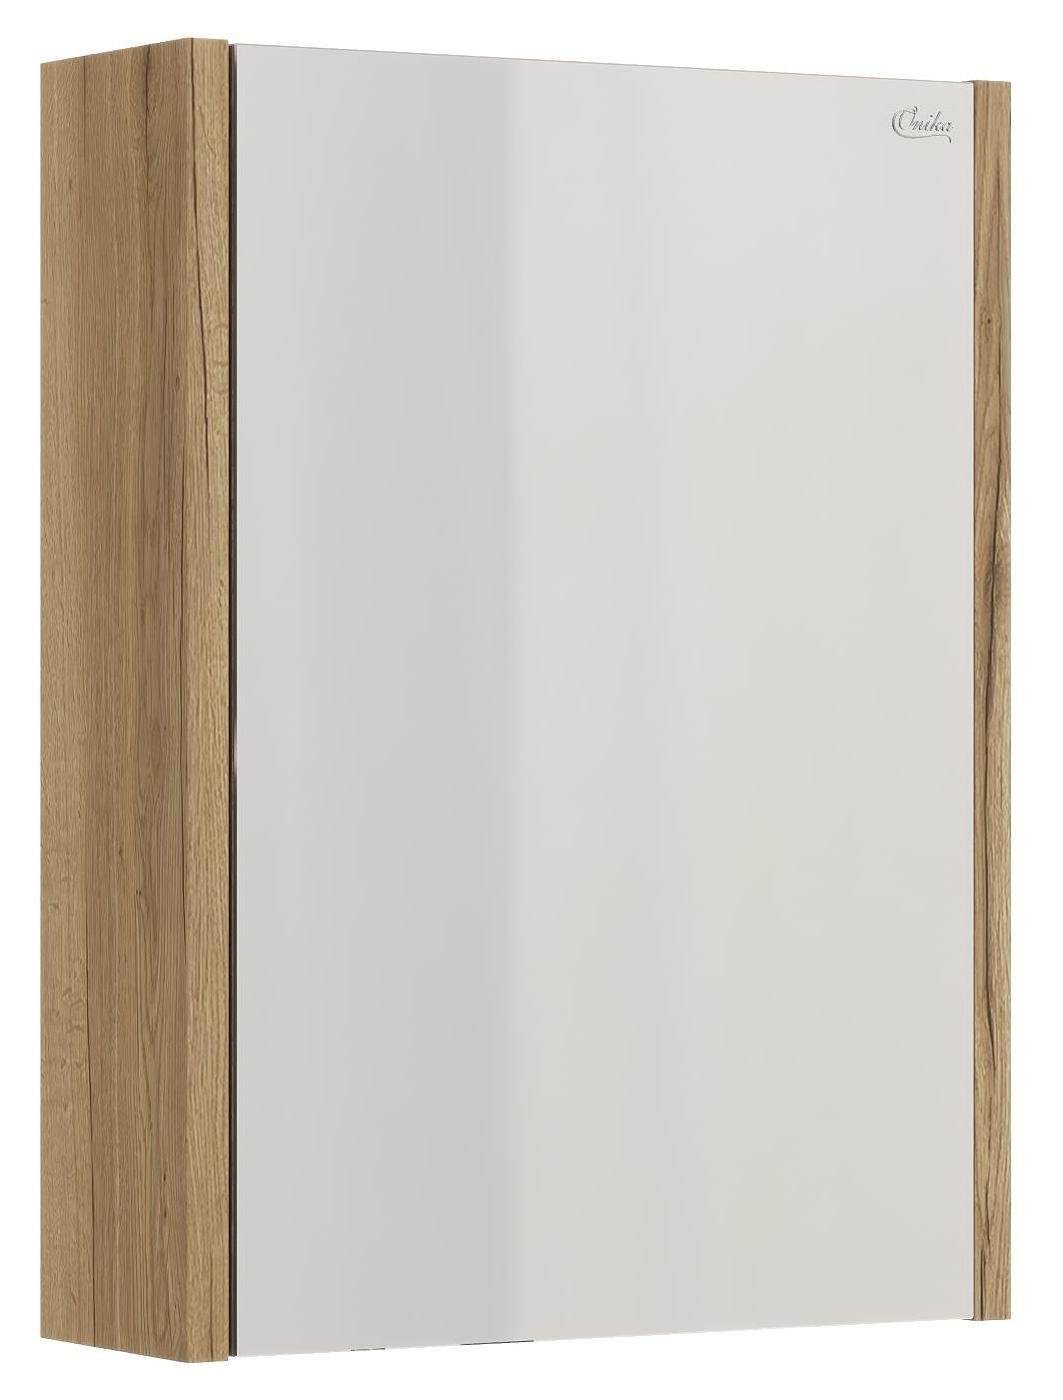 Зеркальный шкаф Onika Селеста 52 см дуб галифакс, 205214